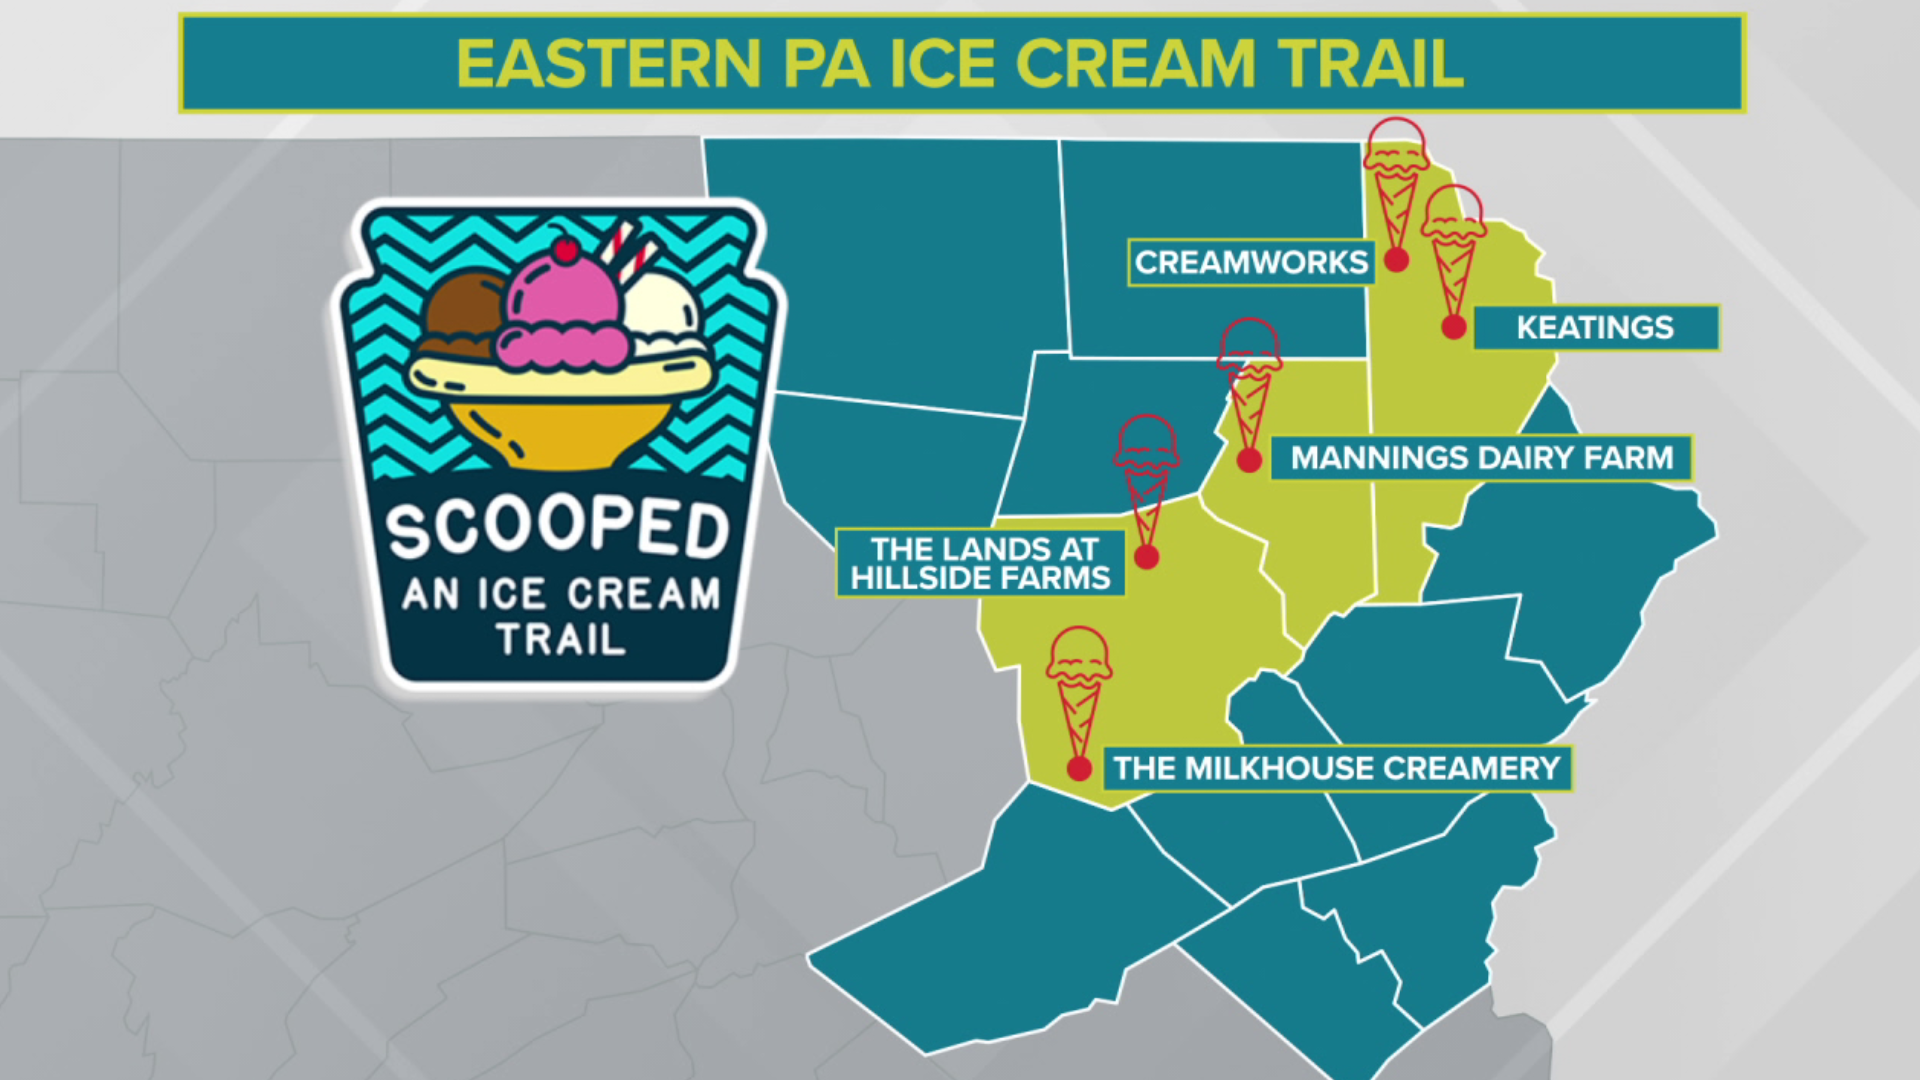 Eastern PA ice cream trail returns